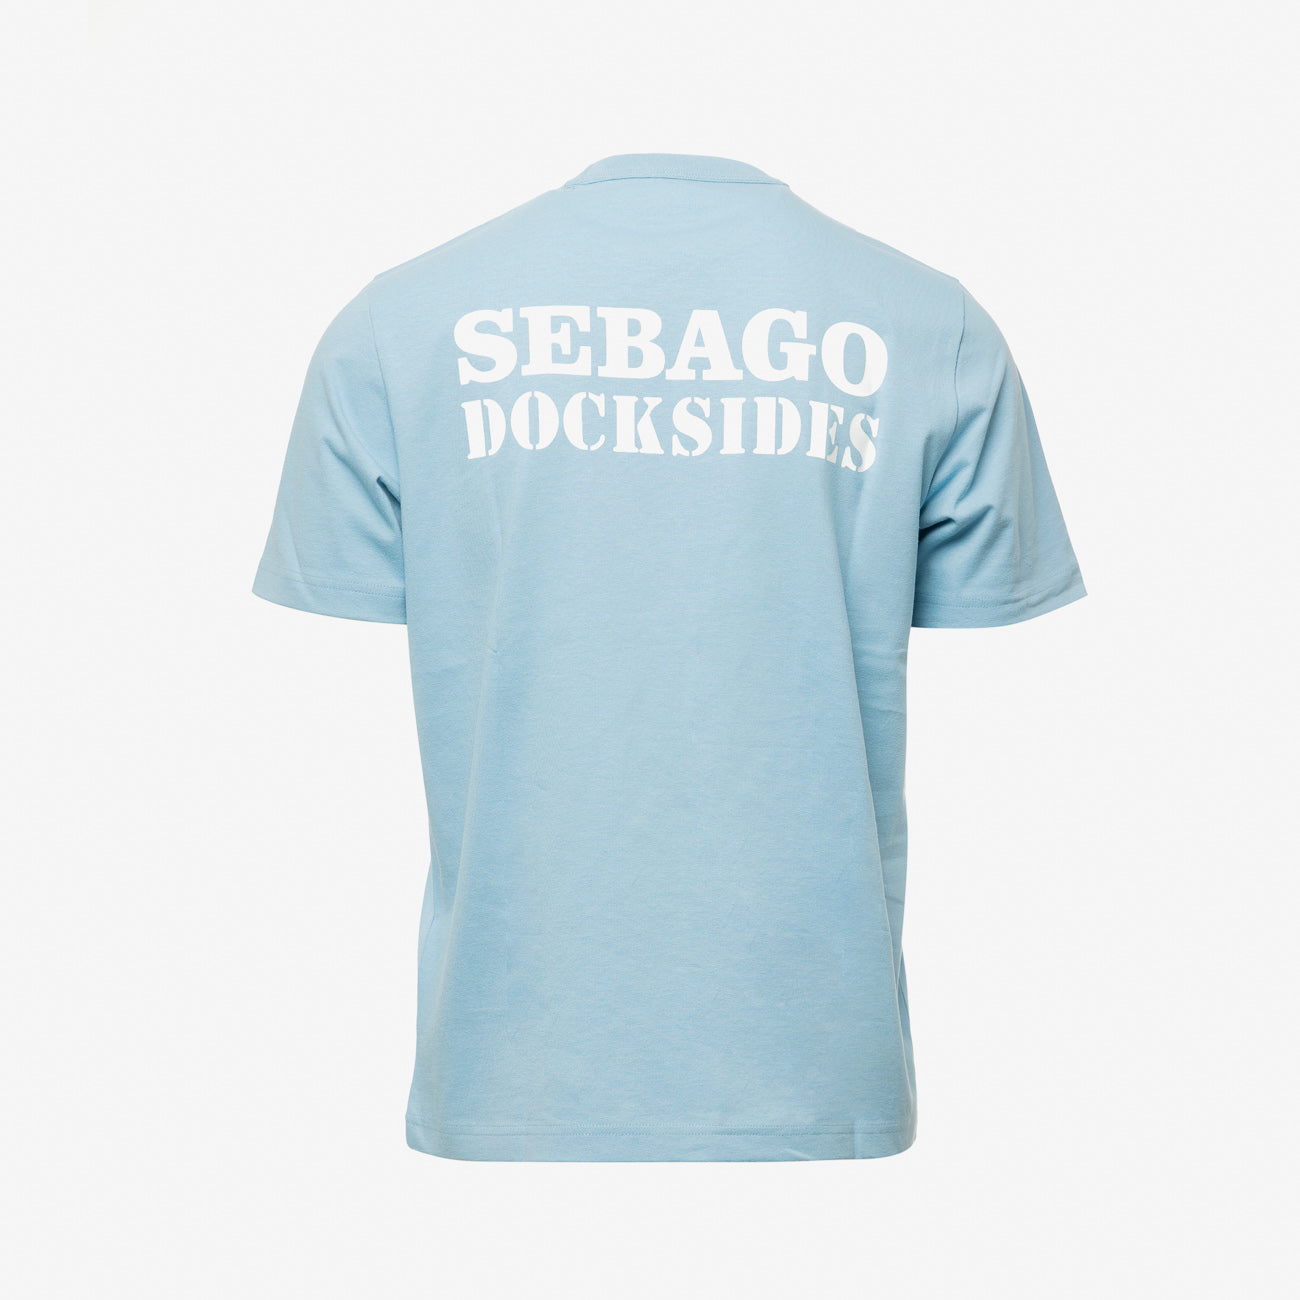 Sebago Tillers short-sleeved T-shirt in light blue cotton